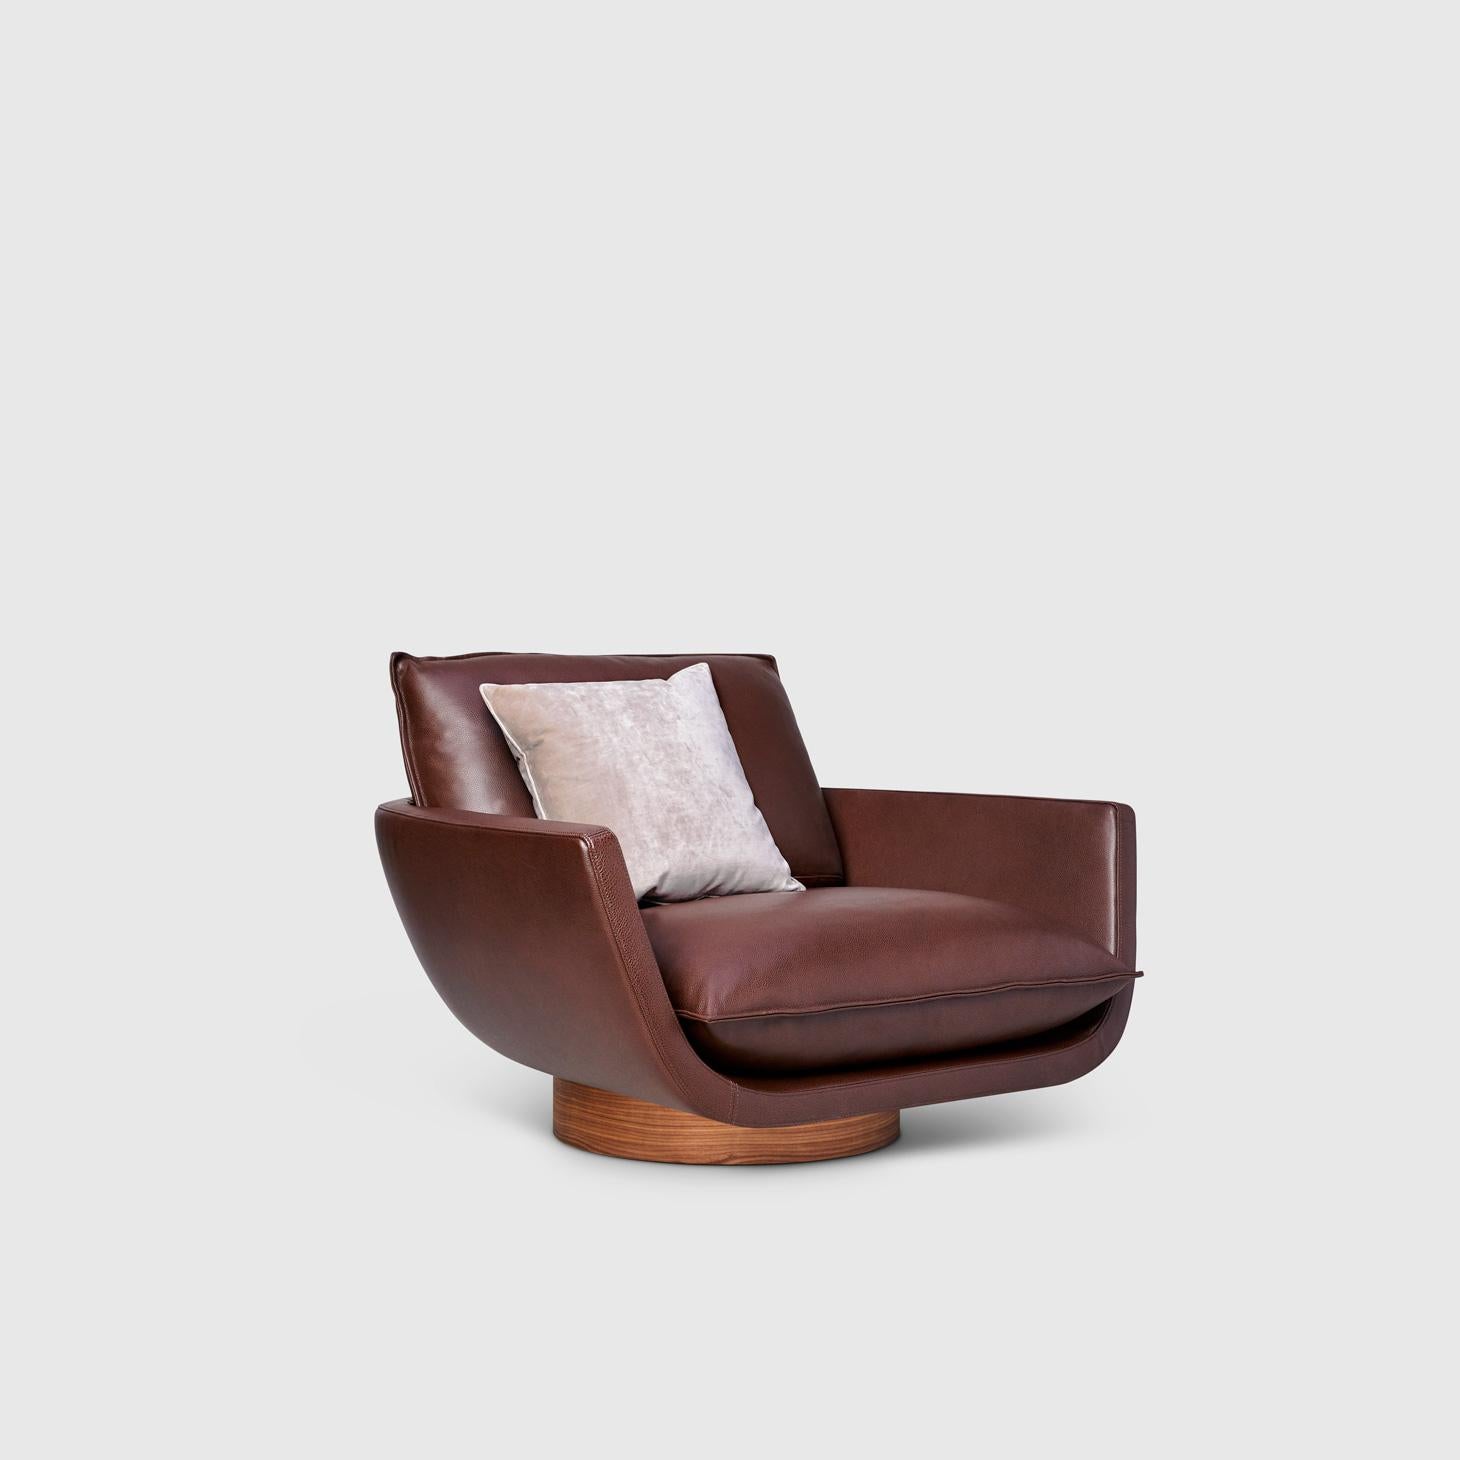 Modern Rua Ipanema Lounge Chair by Yabu Pushelberg in Rustic Nappa Leather